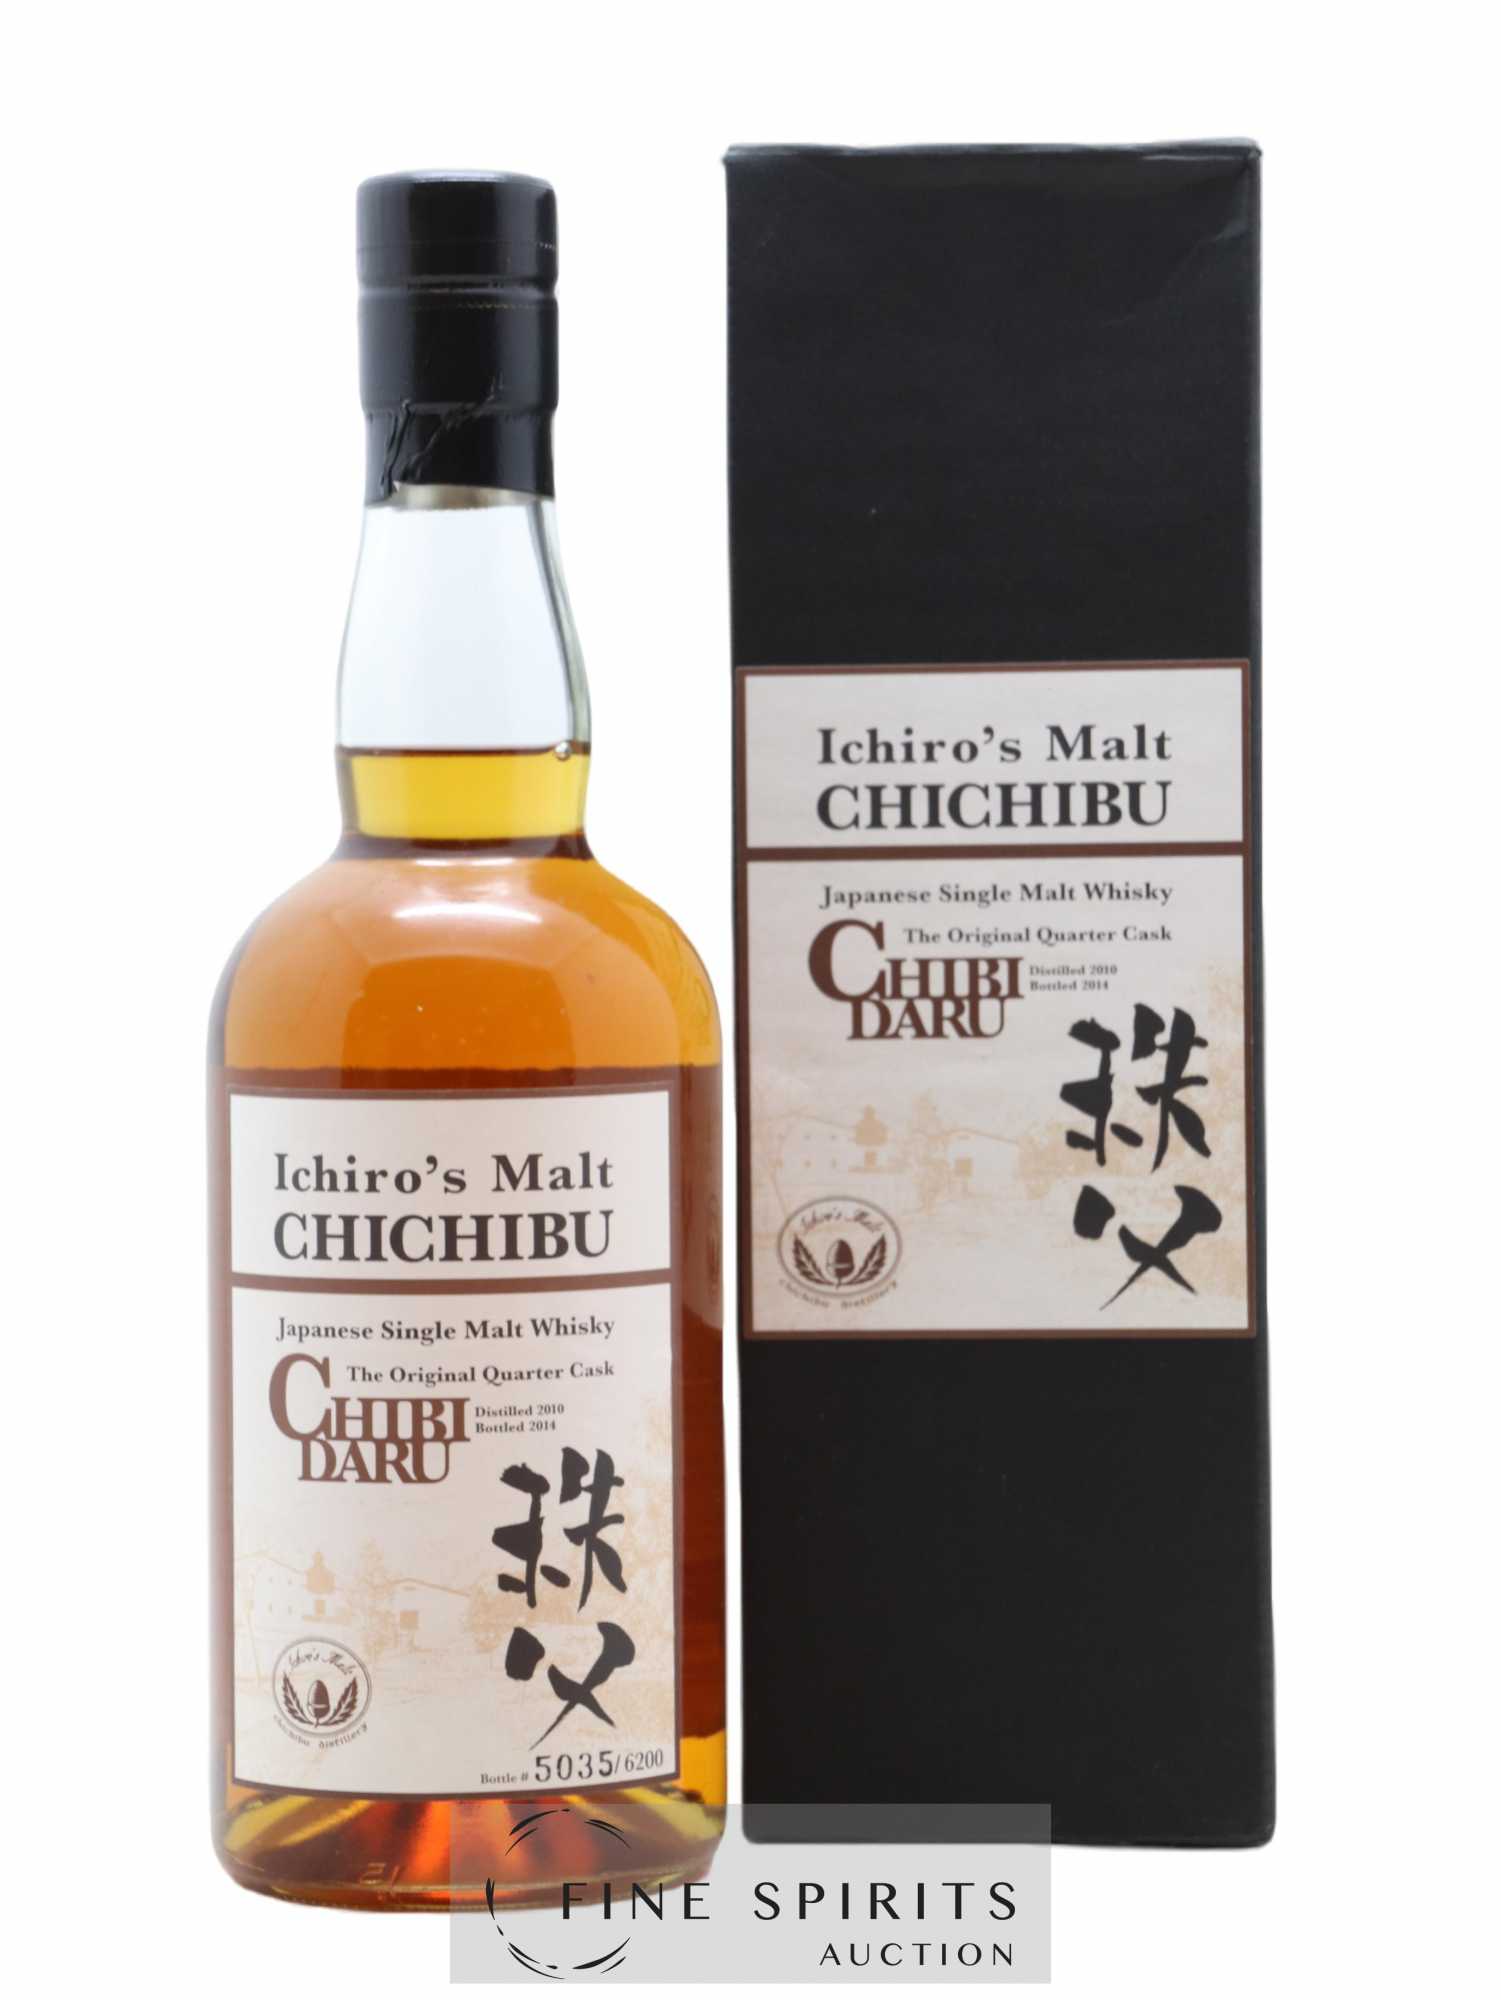 Chichibu 2010 Of. Chibidaru The Original Quarter Cask One of 6200 - bottled 2014 Ichiro's Malt 